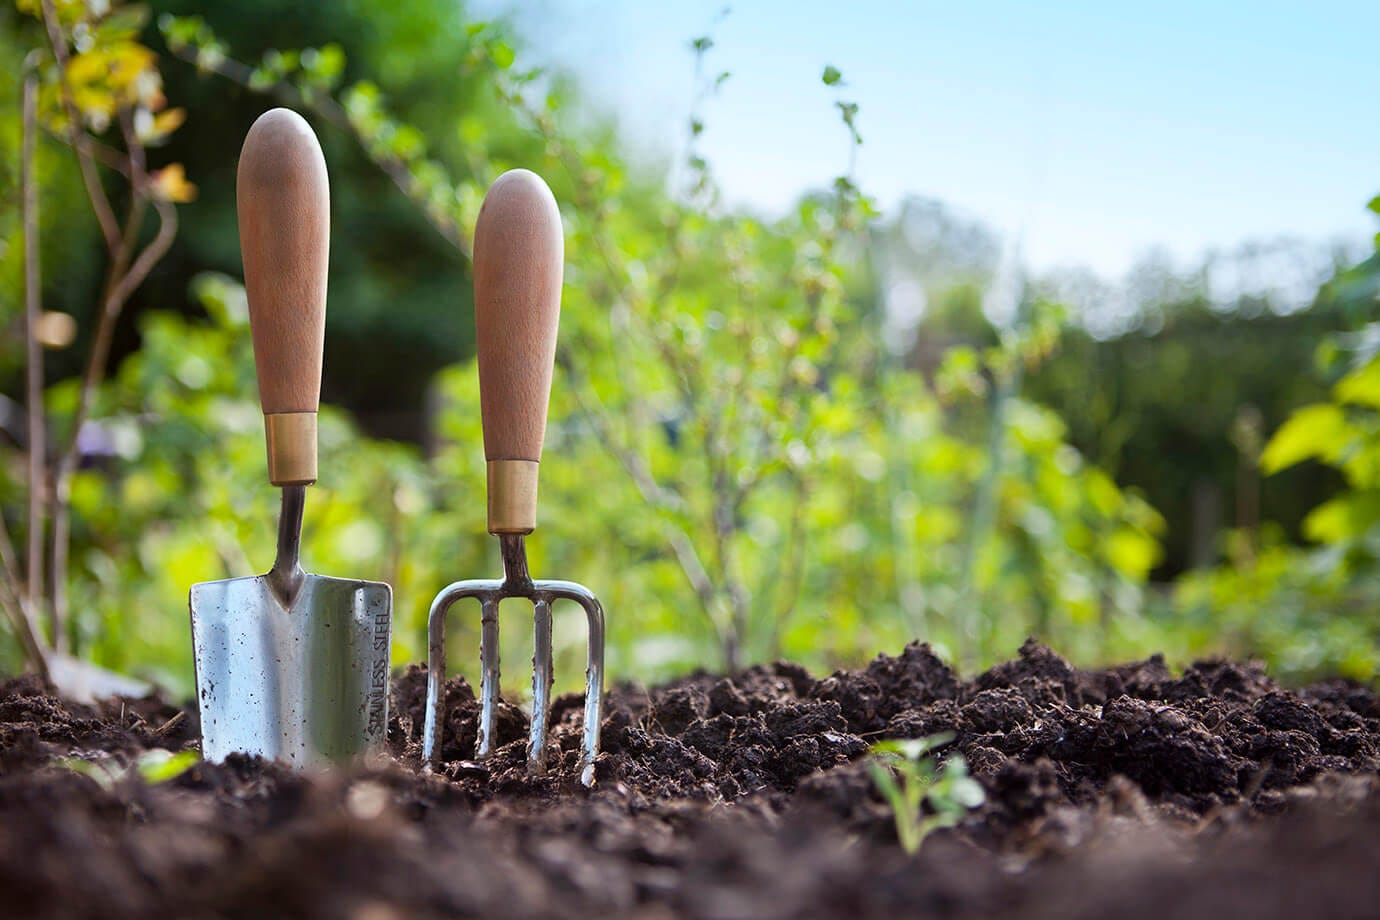 Garden tools upright in rich, dark soil